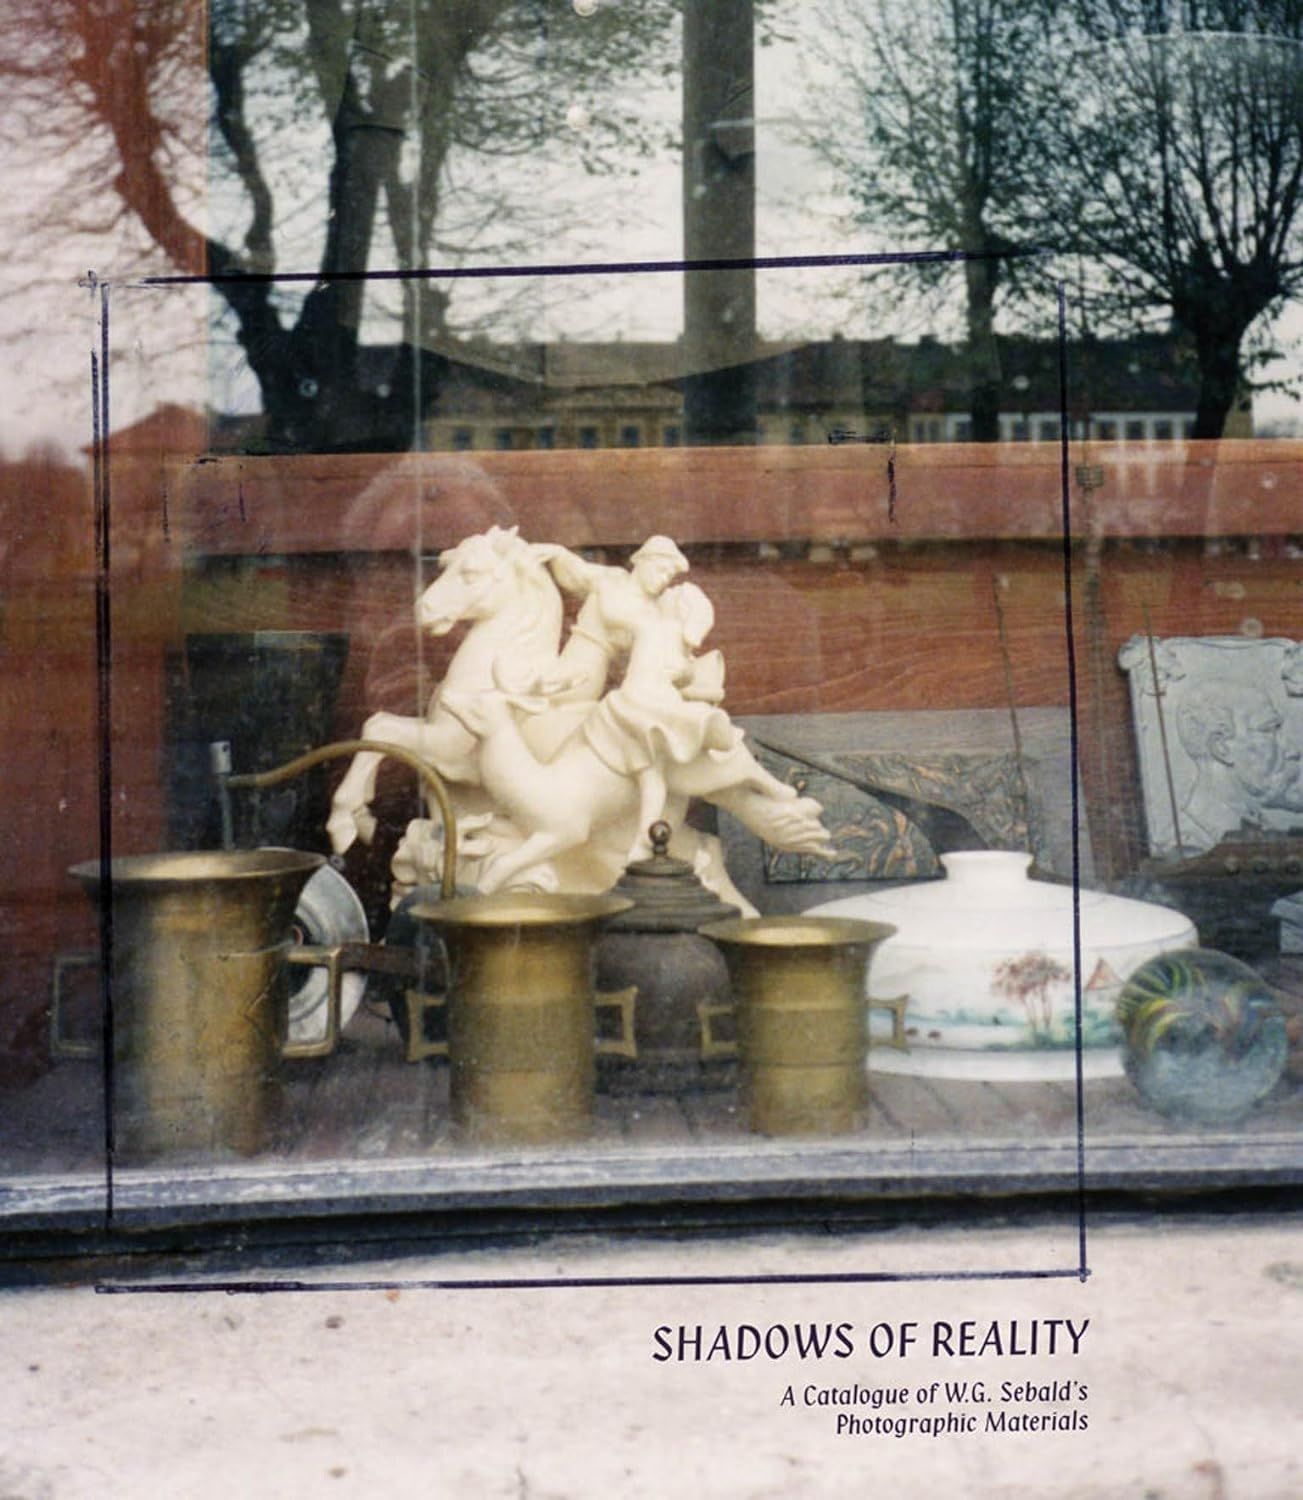 W. G. Sebald’s Deepfakes: On “Shadows of Reality”